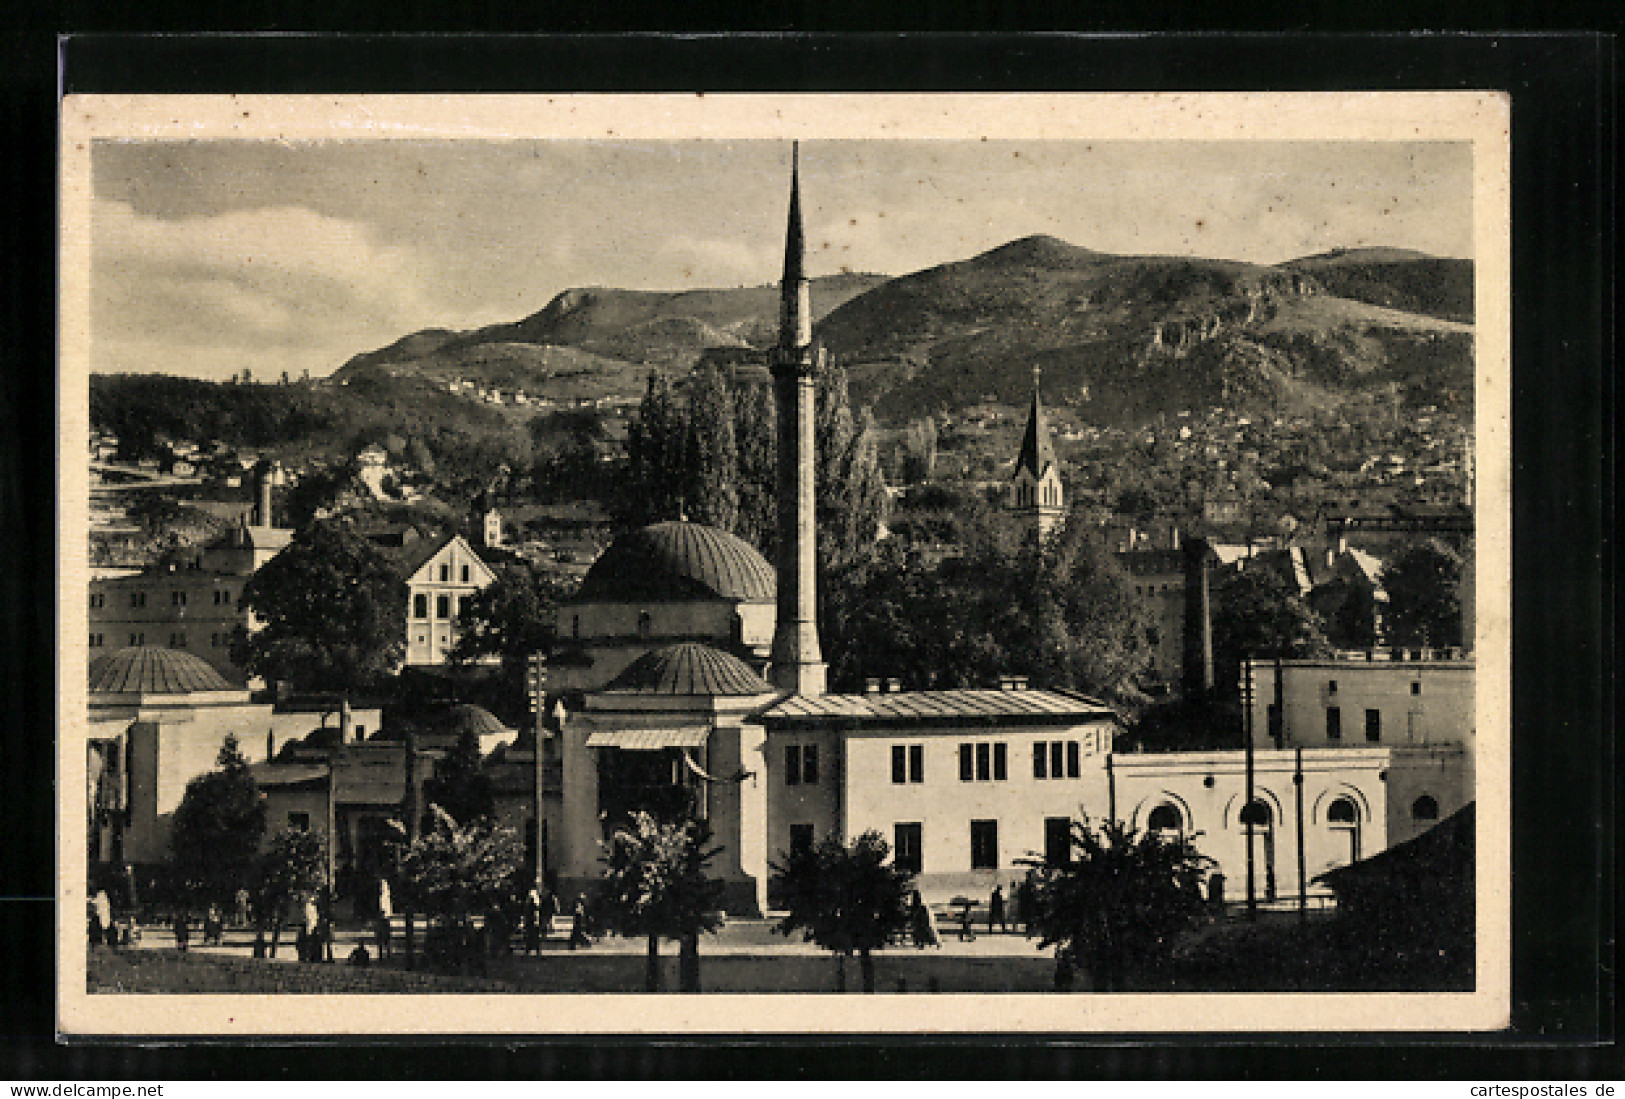 AK Sarajevo, Kaiser Moschee, Careva Dzamija  - Bosnie-Herzegovine